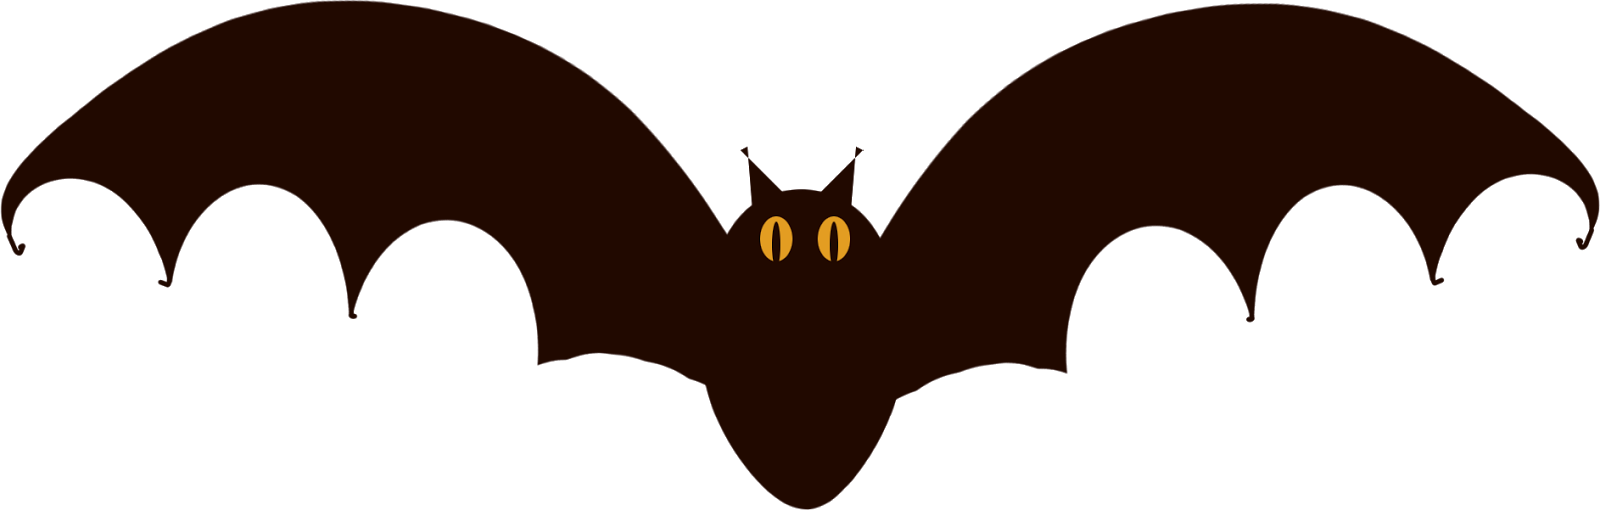 ears clipart bat